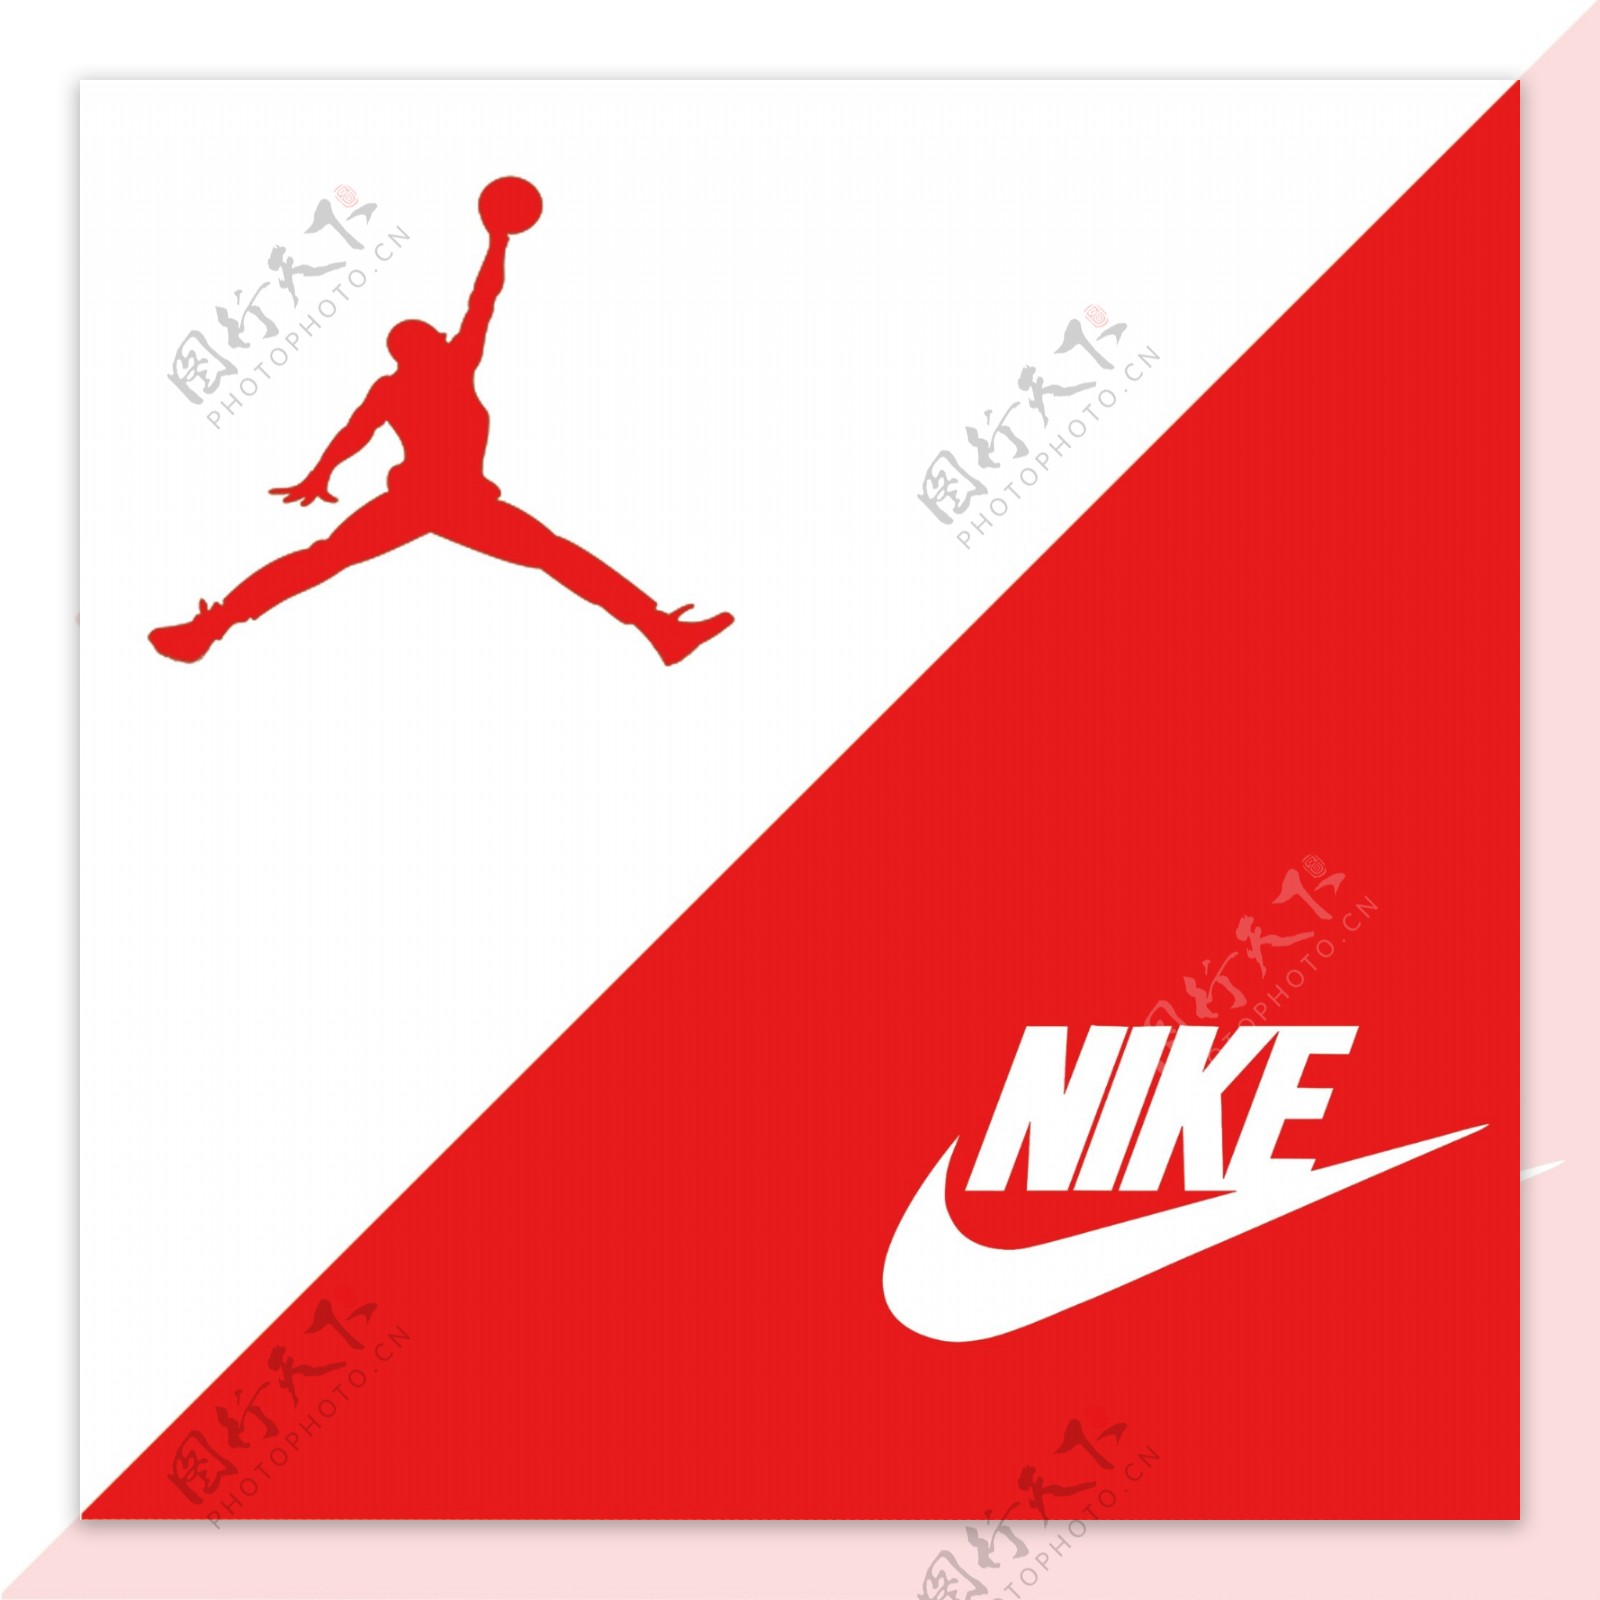 Air Jordan (Jumpman) Logo, symbol, meaning, history, PNG, brand